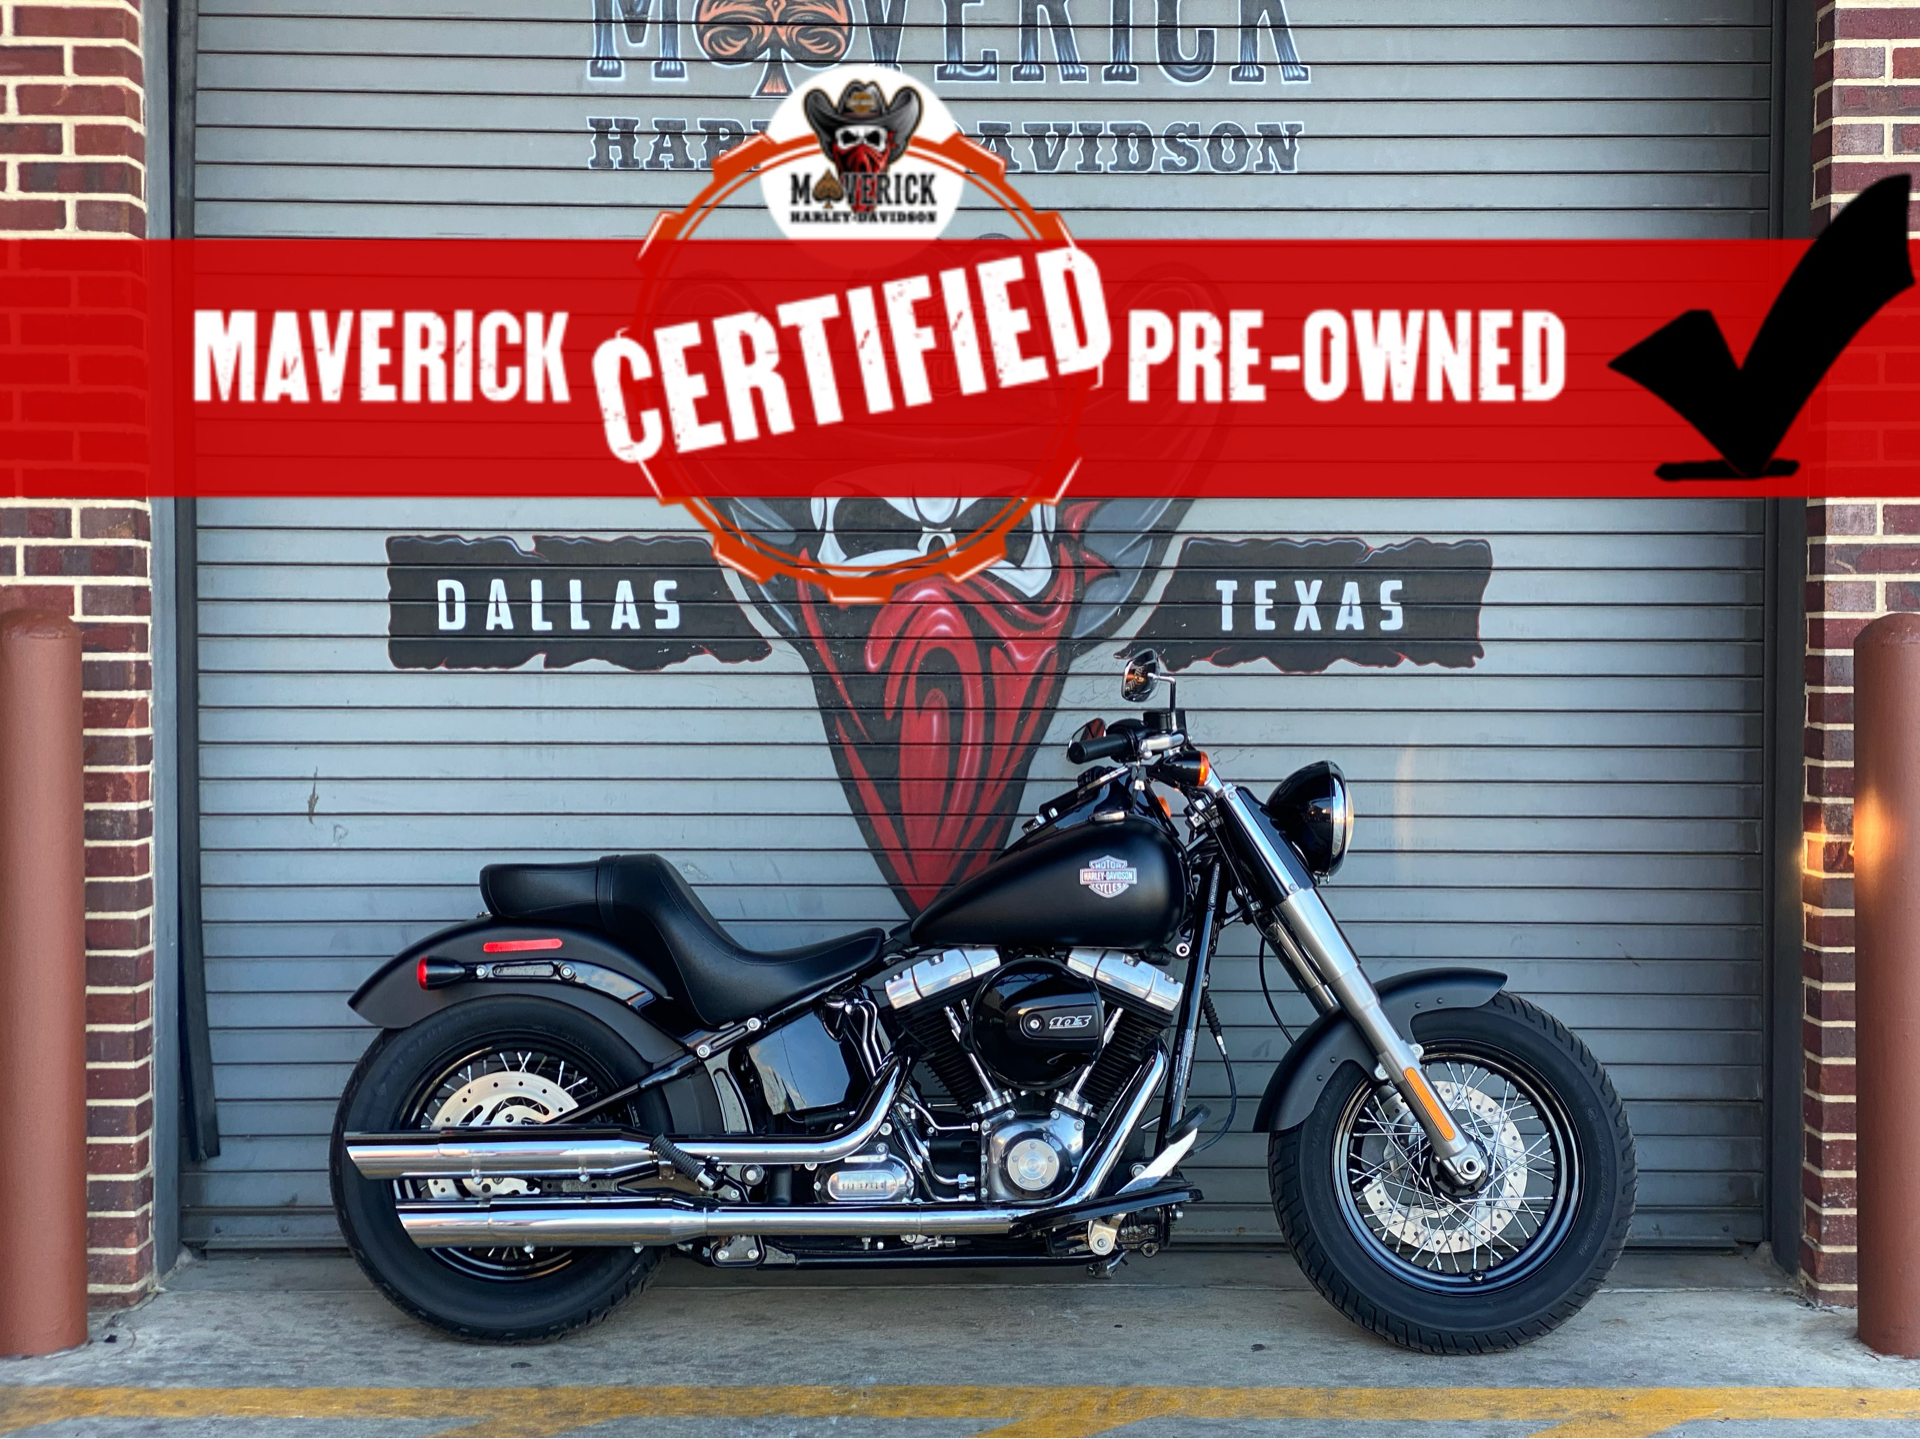 2016 Harley-Davidson Softail Slim® in Carrollton, Texas - Photo 1